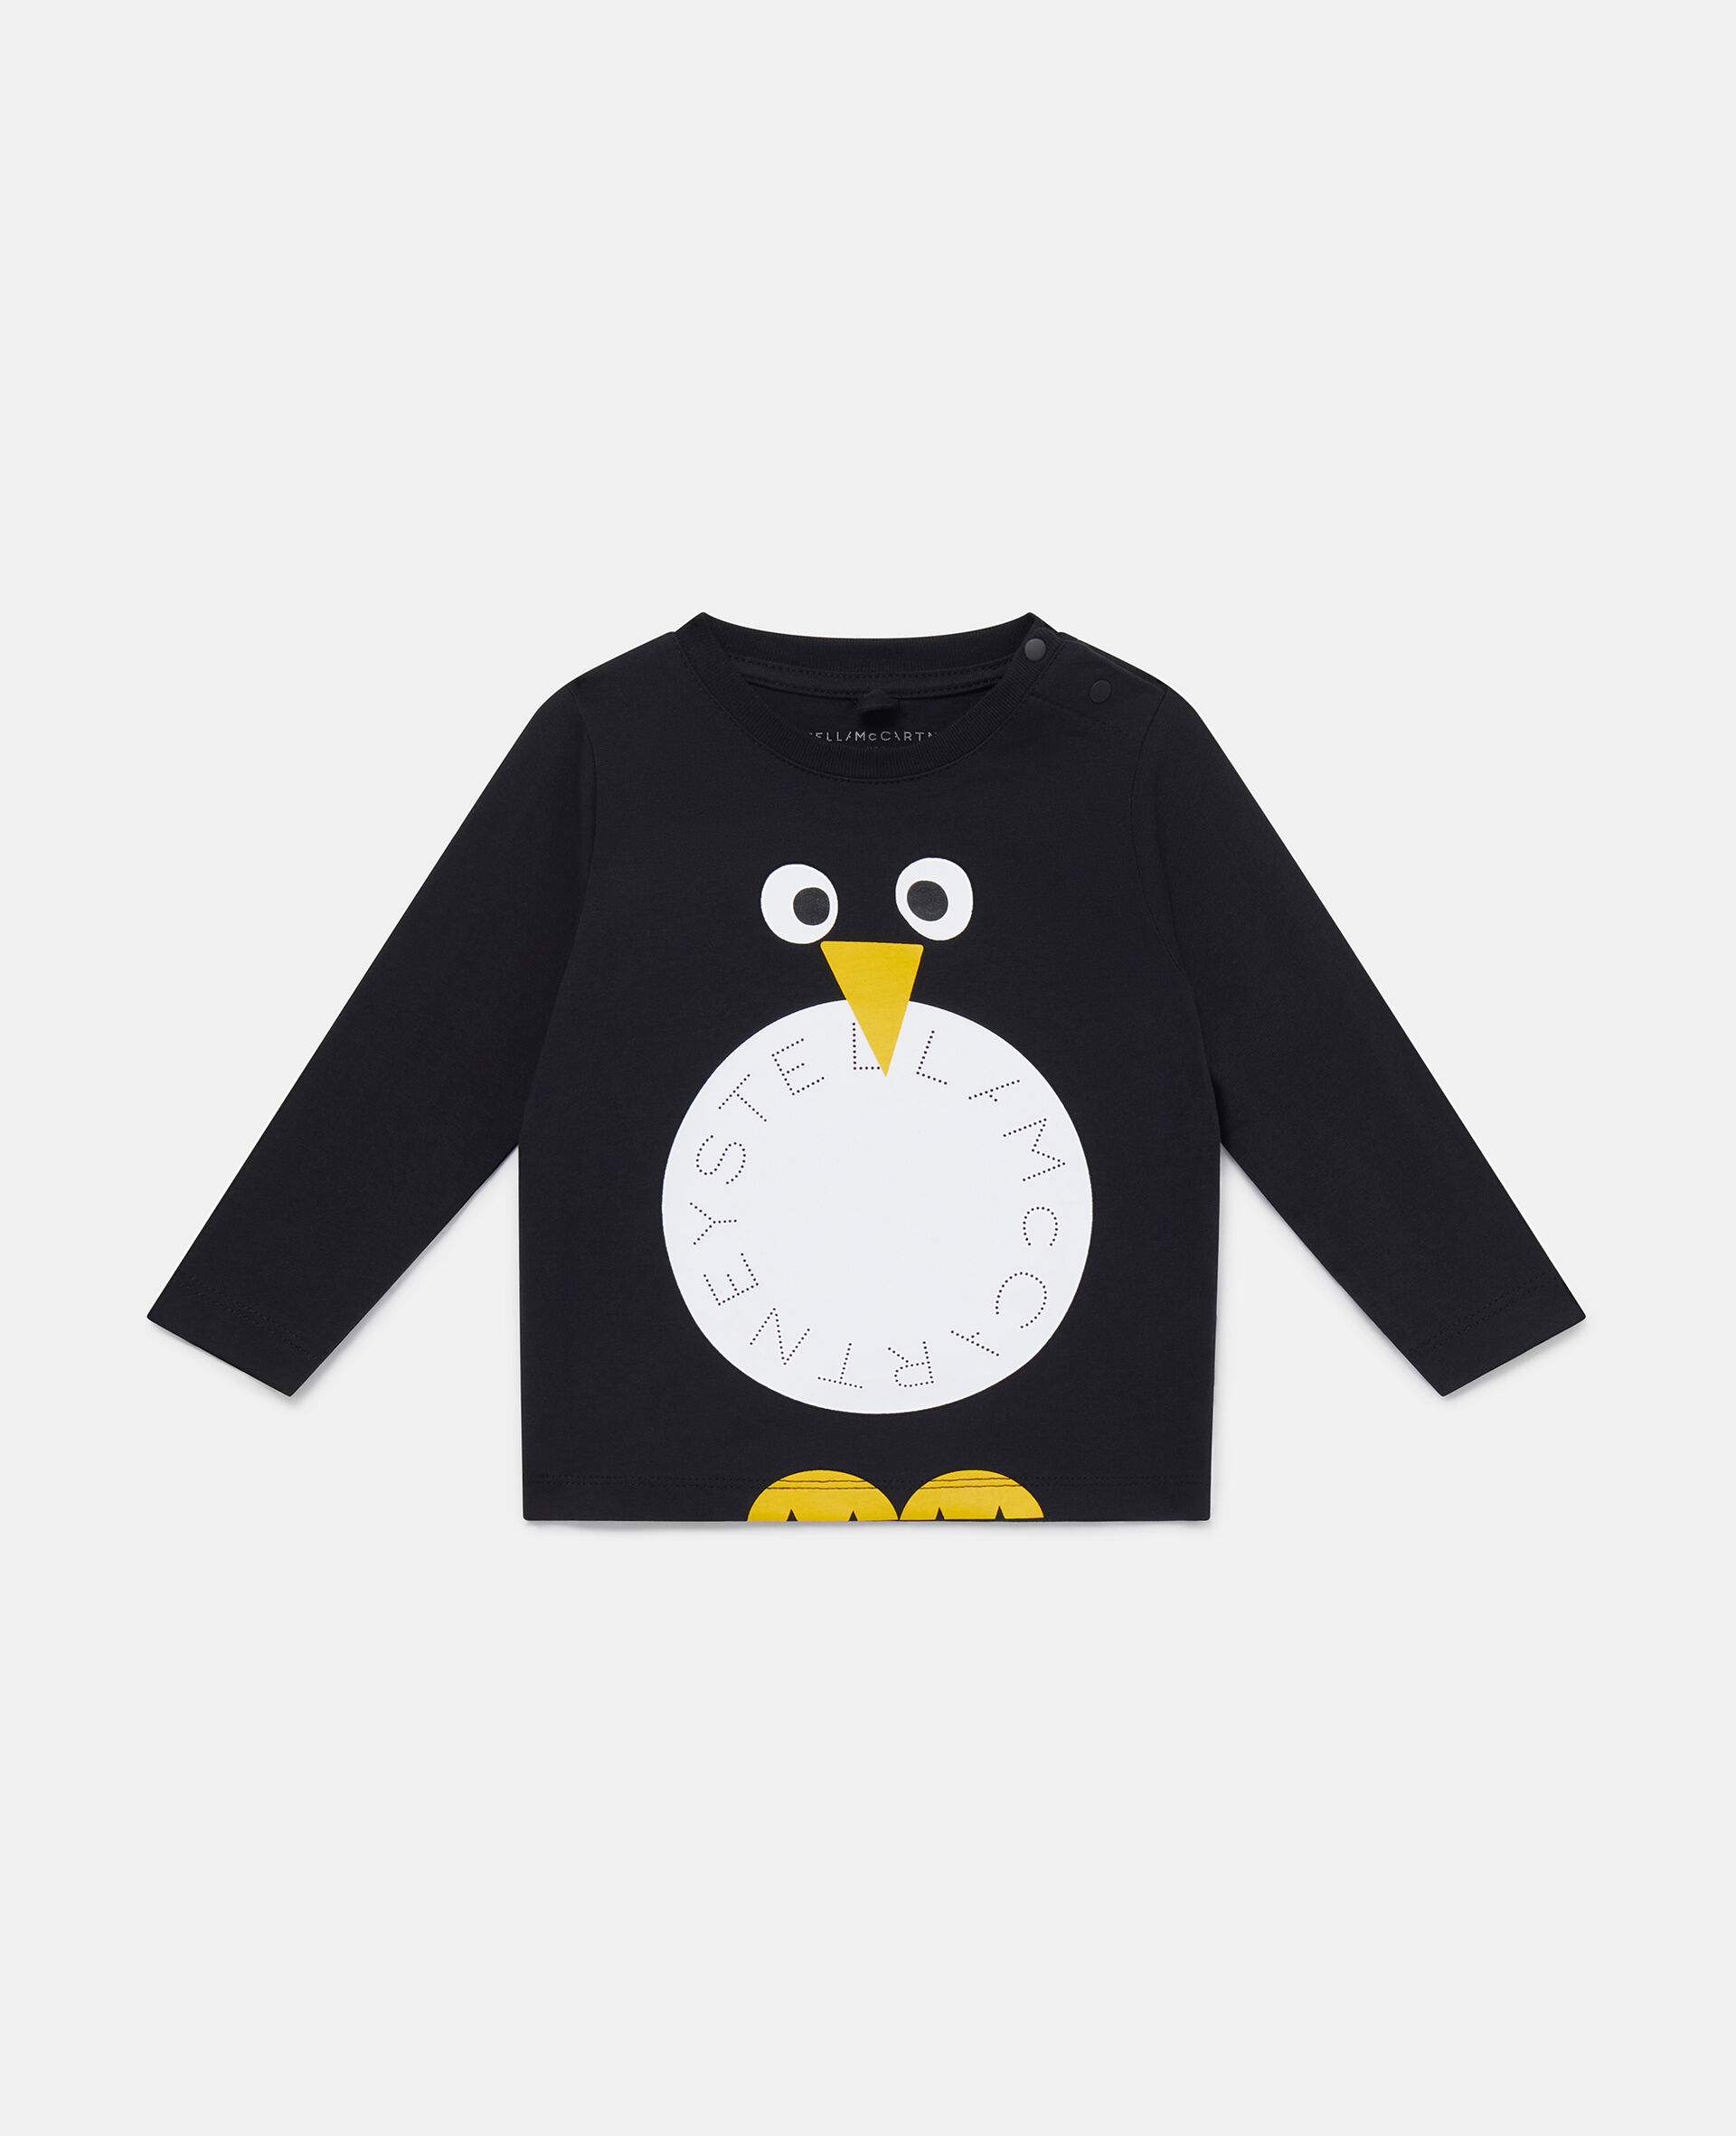 Penguins Unisex Long Sleeve T-Shirt